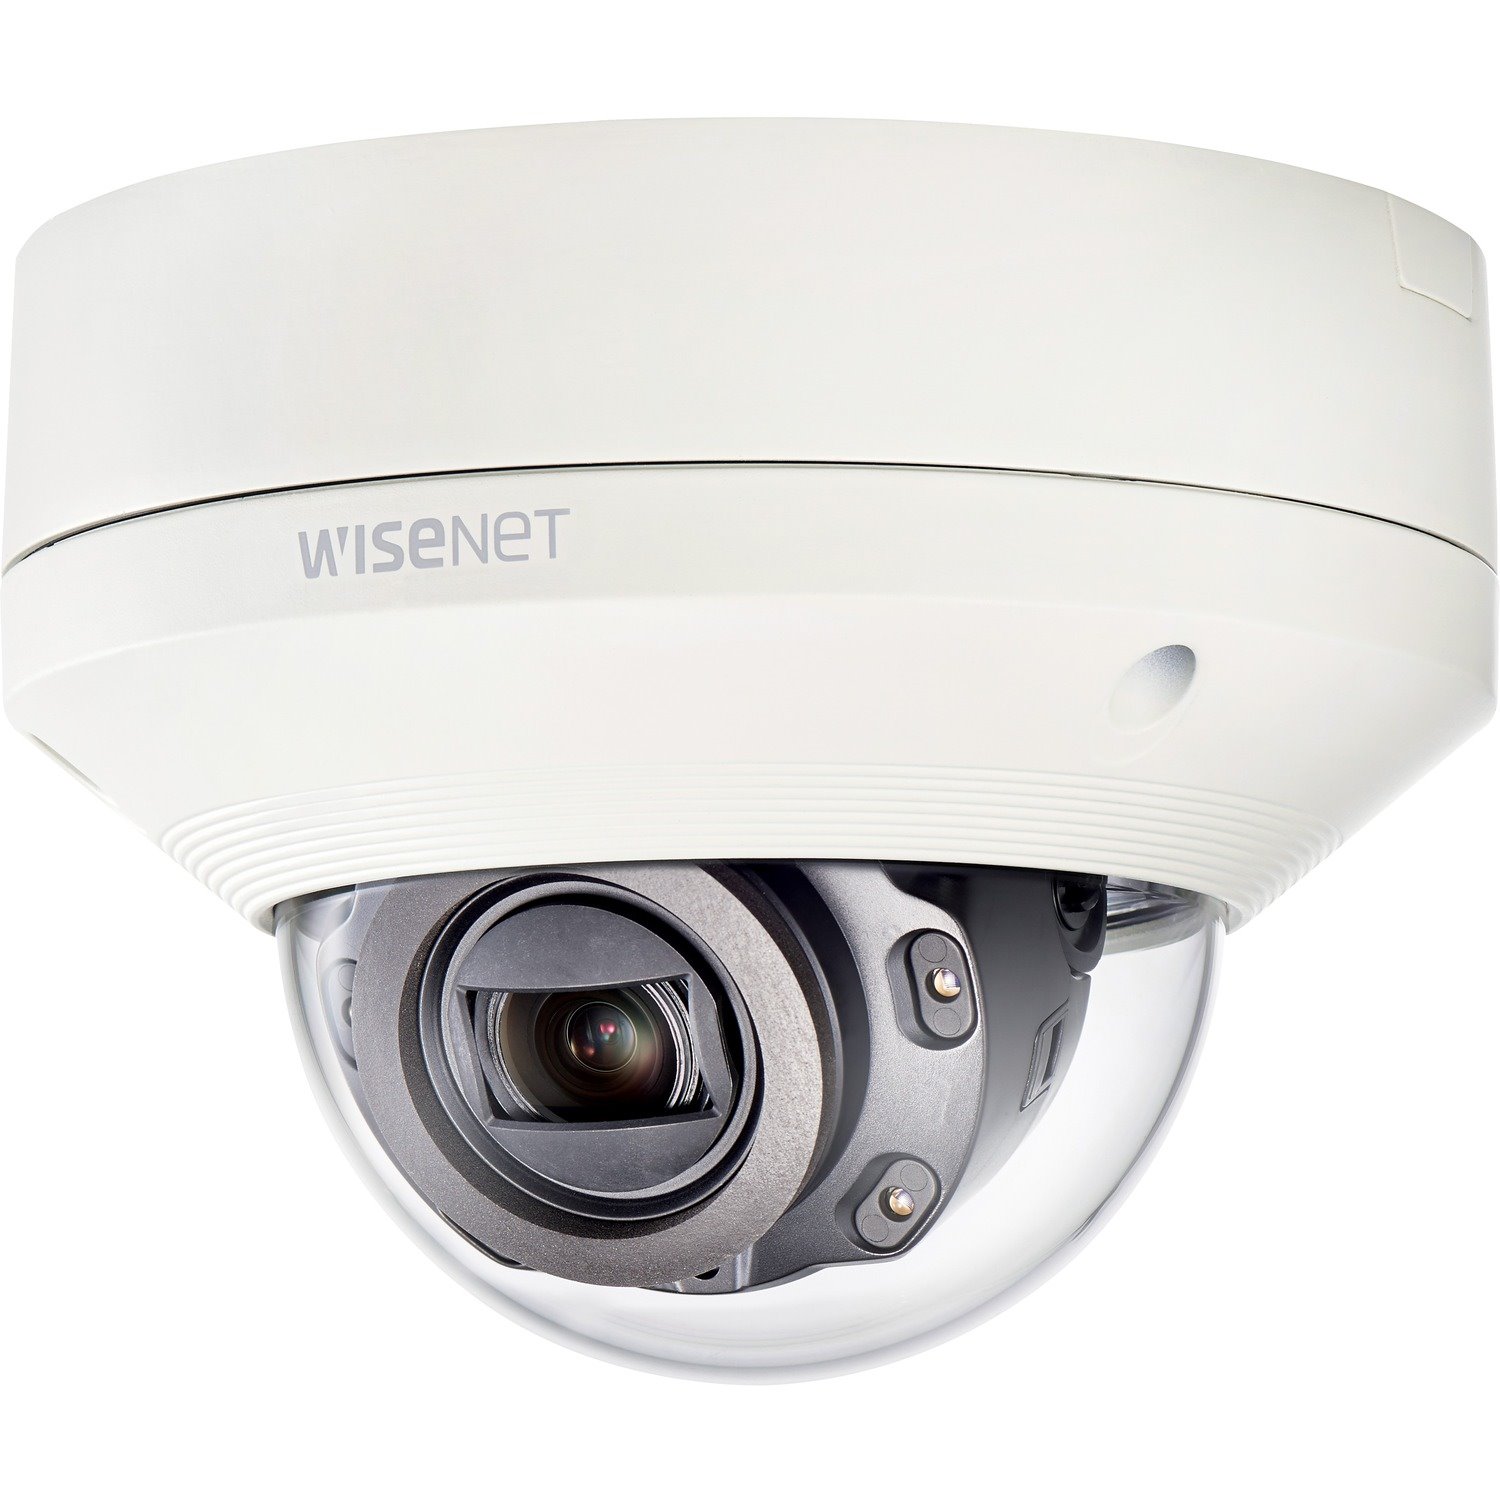 Wisenet XNV-L6080R 2 Megapixel Outdoor HD Network Camera - Color, Monochrome - Dome